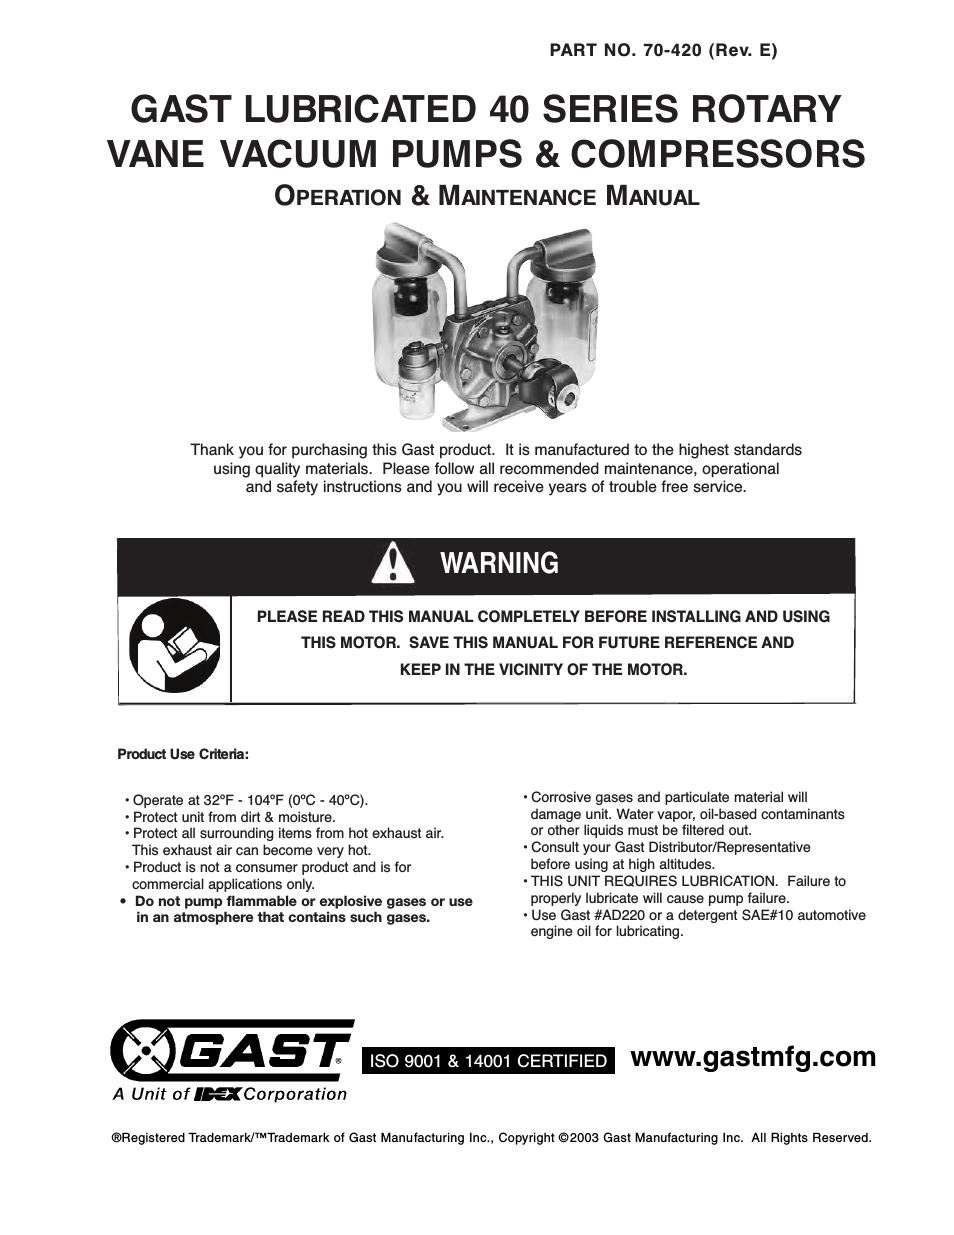 0440 Series Lubricated Vacuum Pumps and Comressors